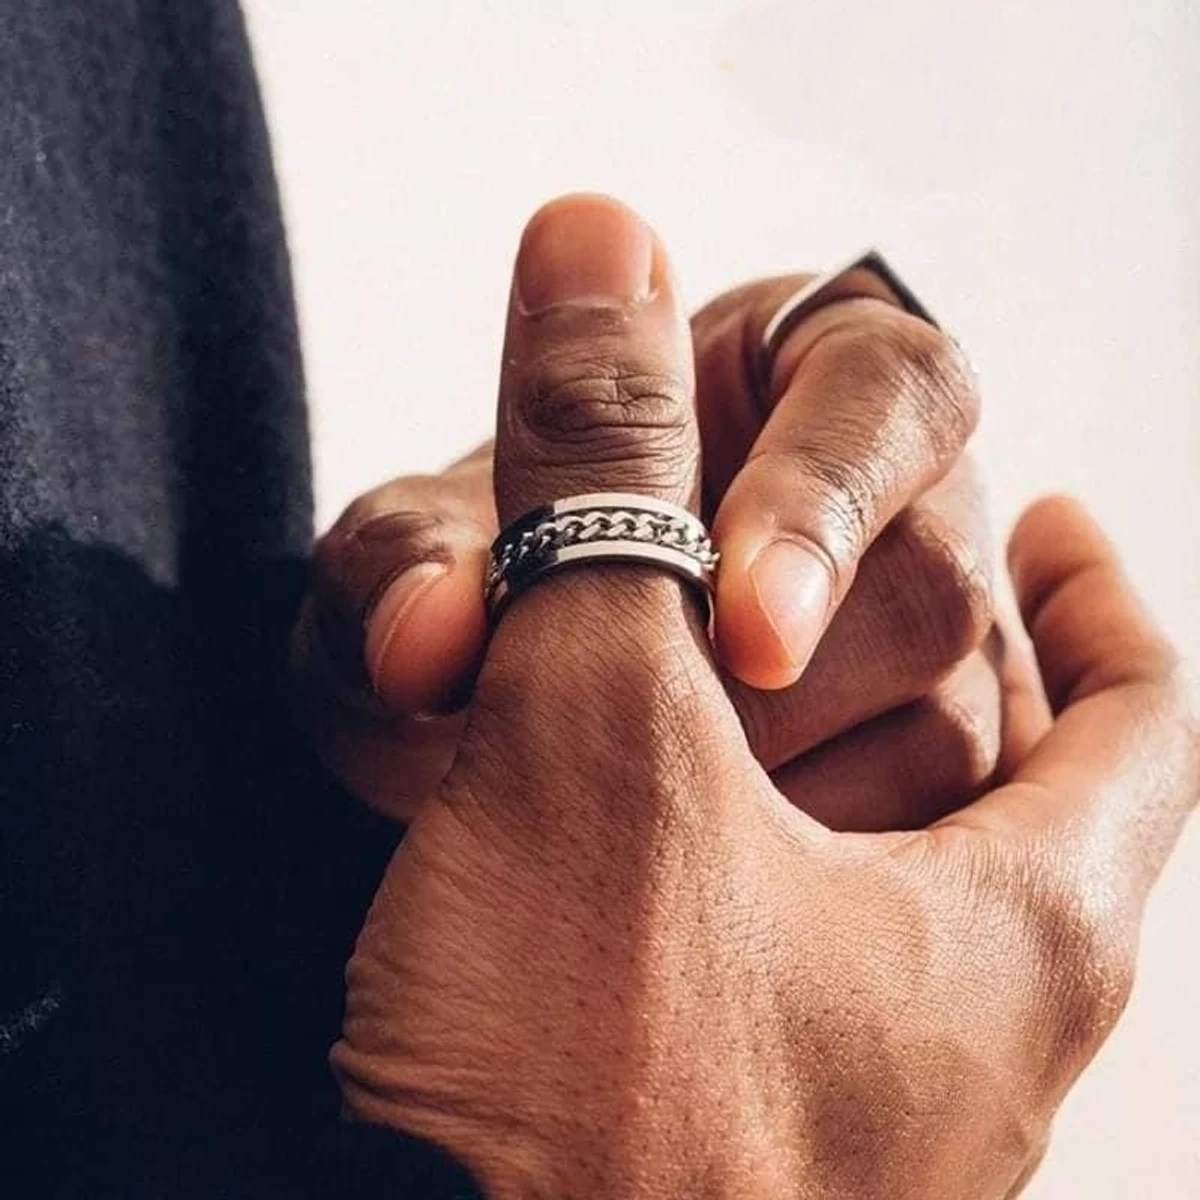 Stainless Steel Rings for Men Fashion Round Finger Ring